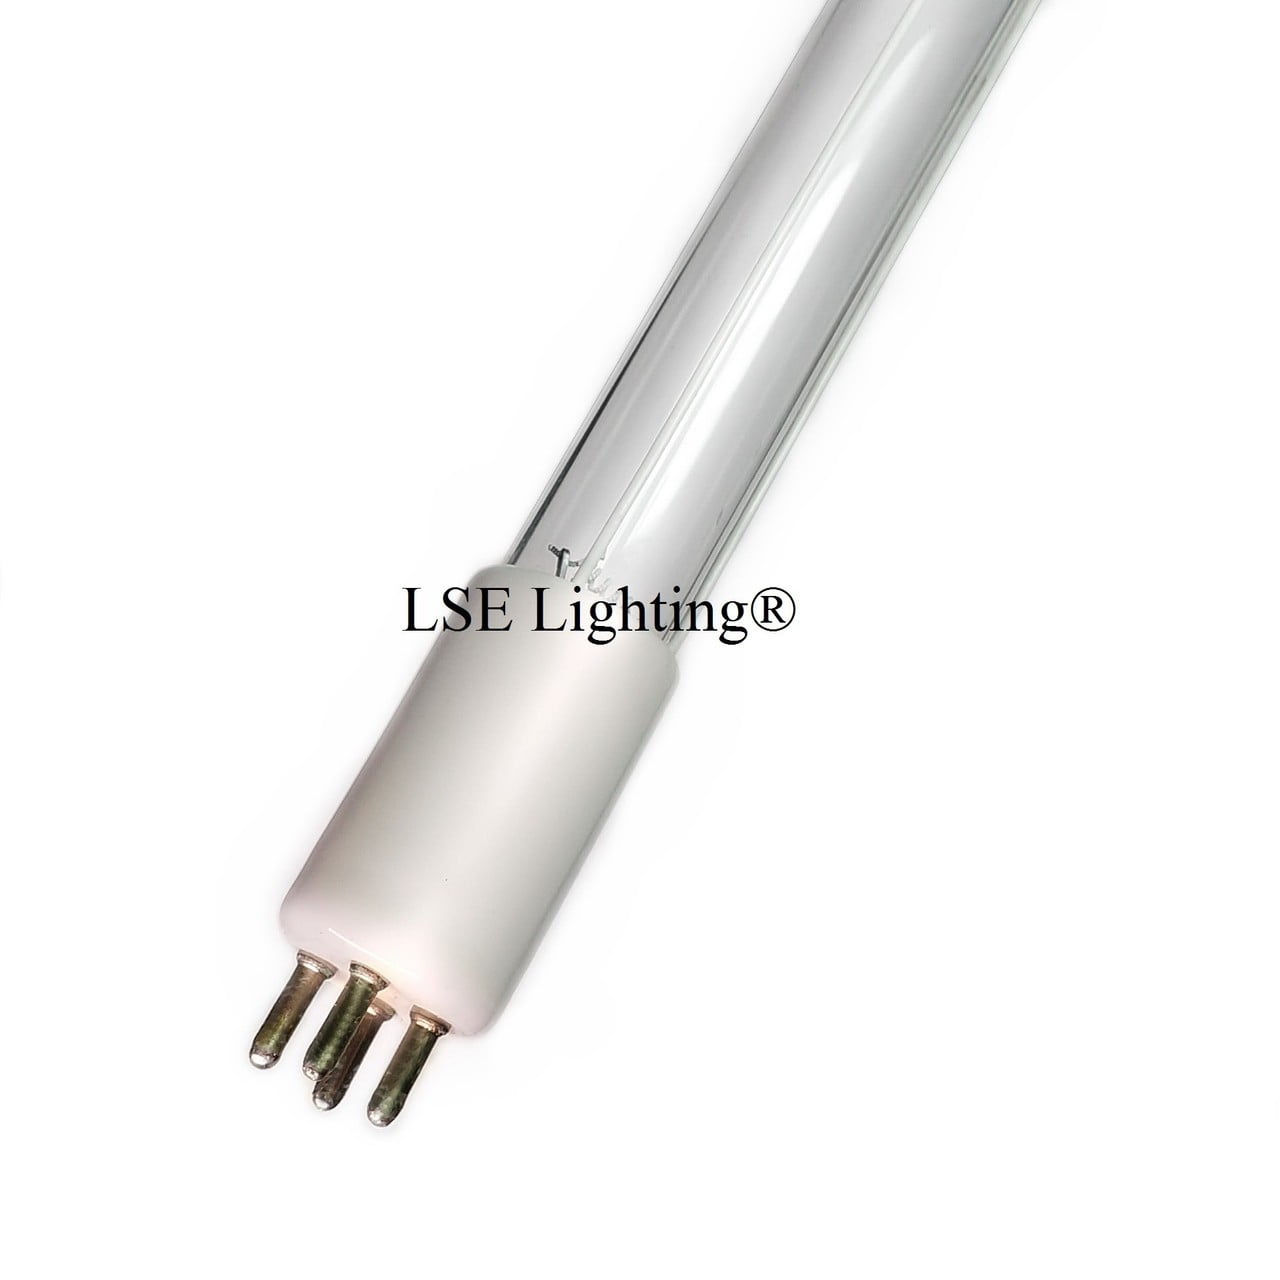 LSE Lighting UV Bulb 05-1097-R for Atlantic Ultraviolet MP22 MP22A Filter 